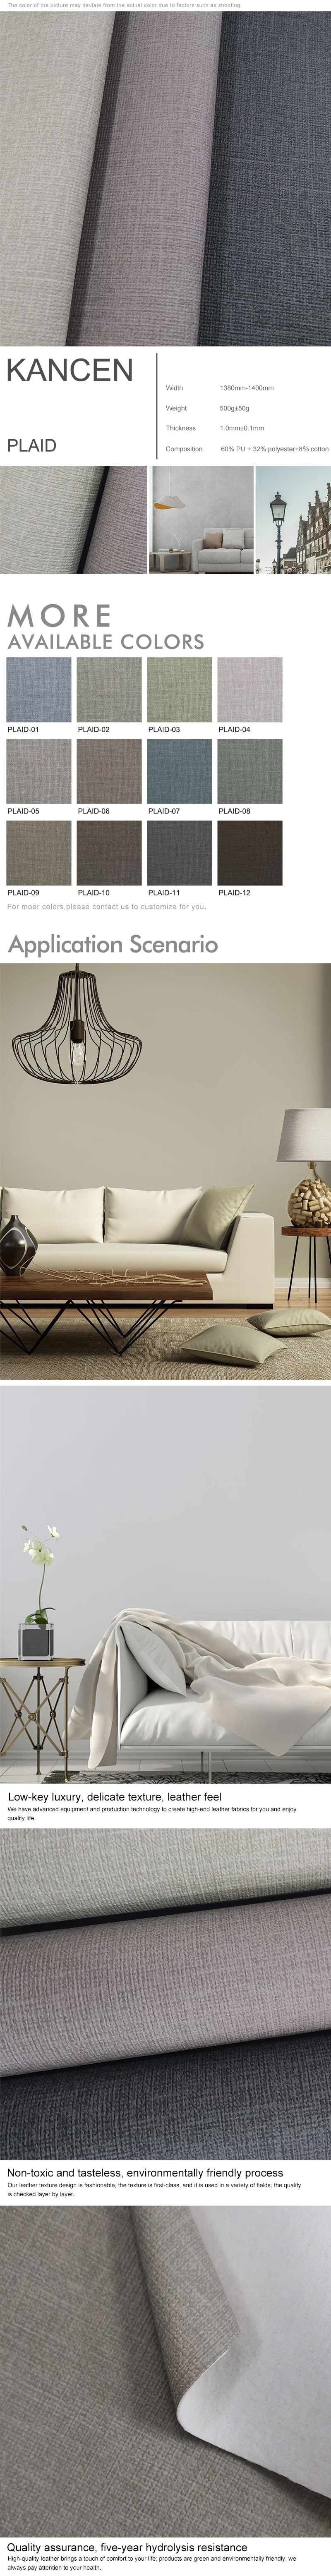 Soft Sofa PU design - KANCEN